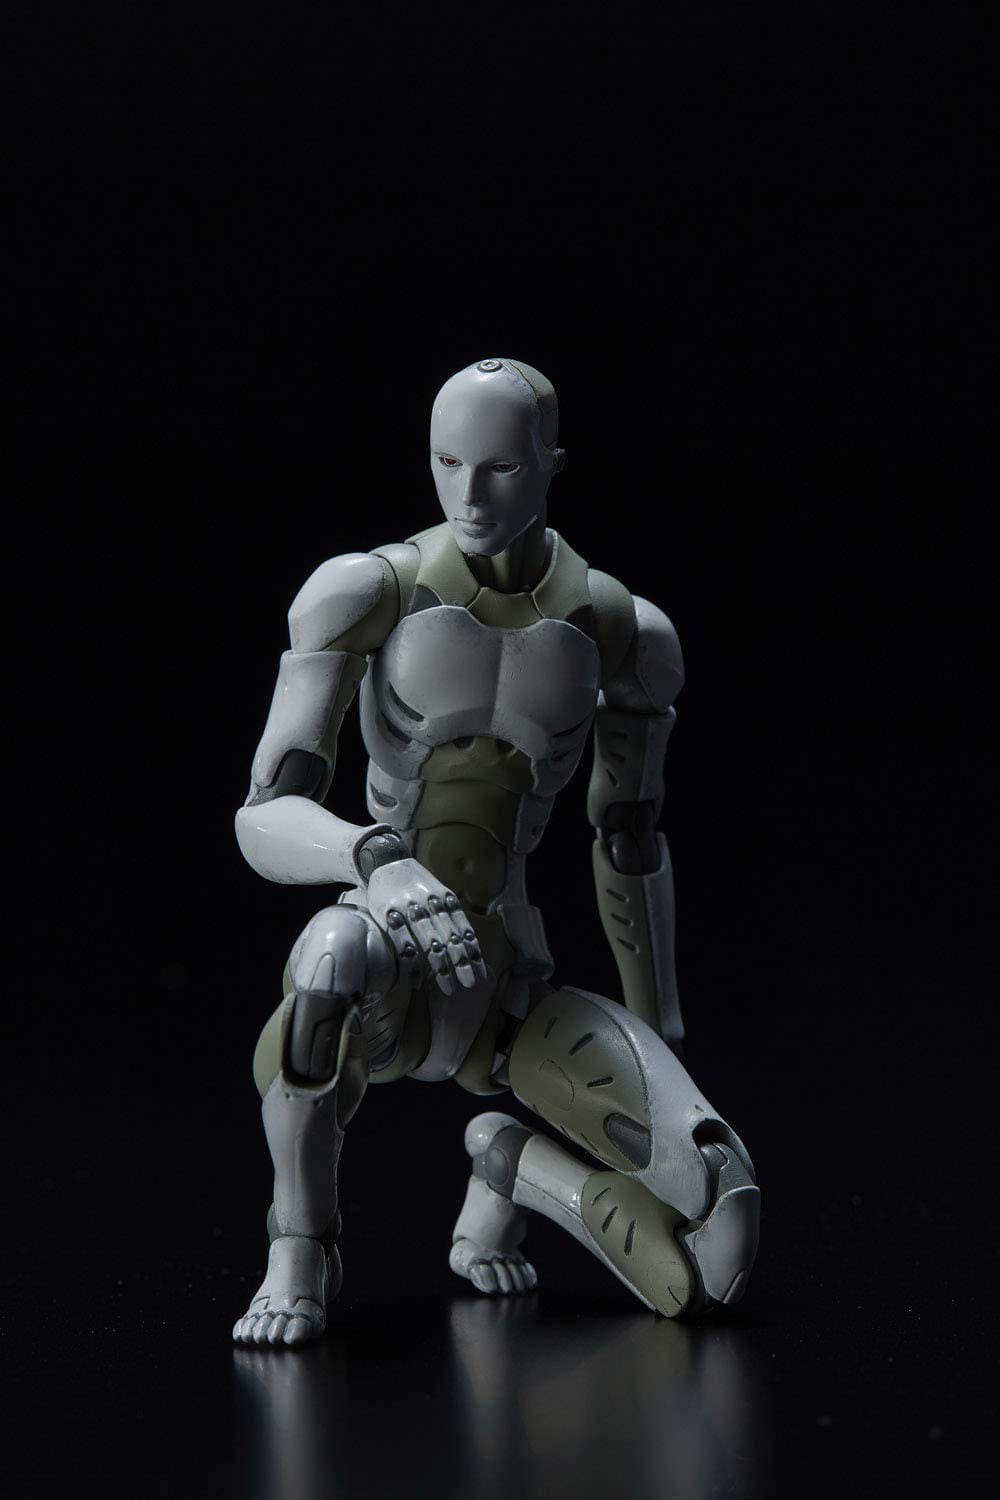 TOA Heavy Industries Synthetic Human He Body 1/12 Action PVC Figure Figurine IB 